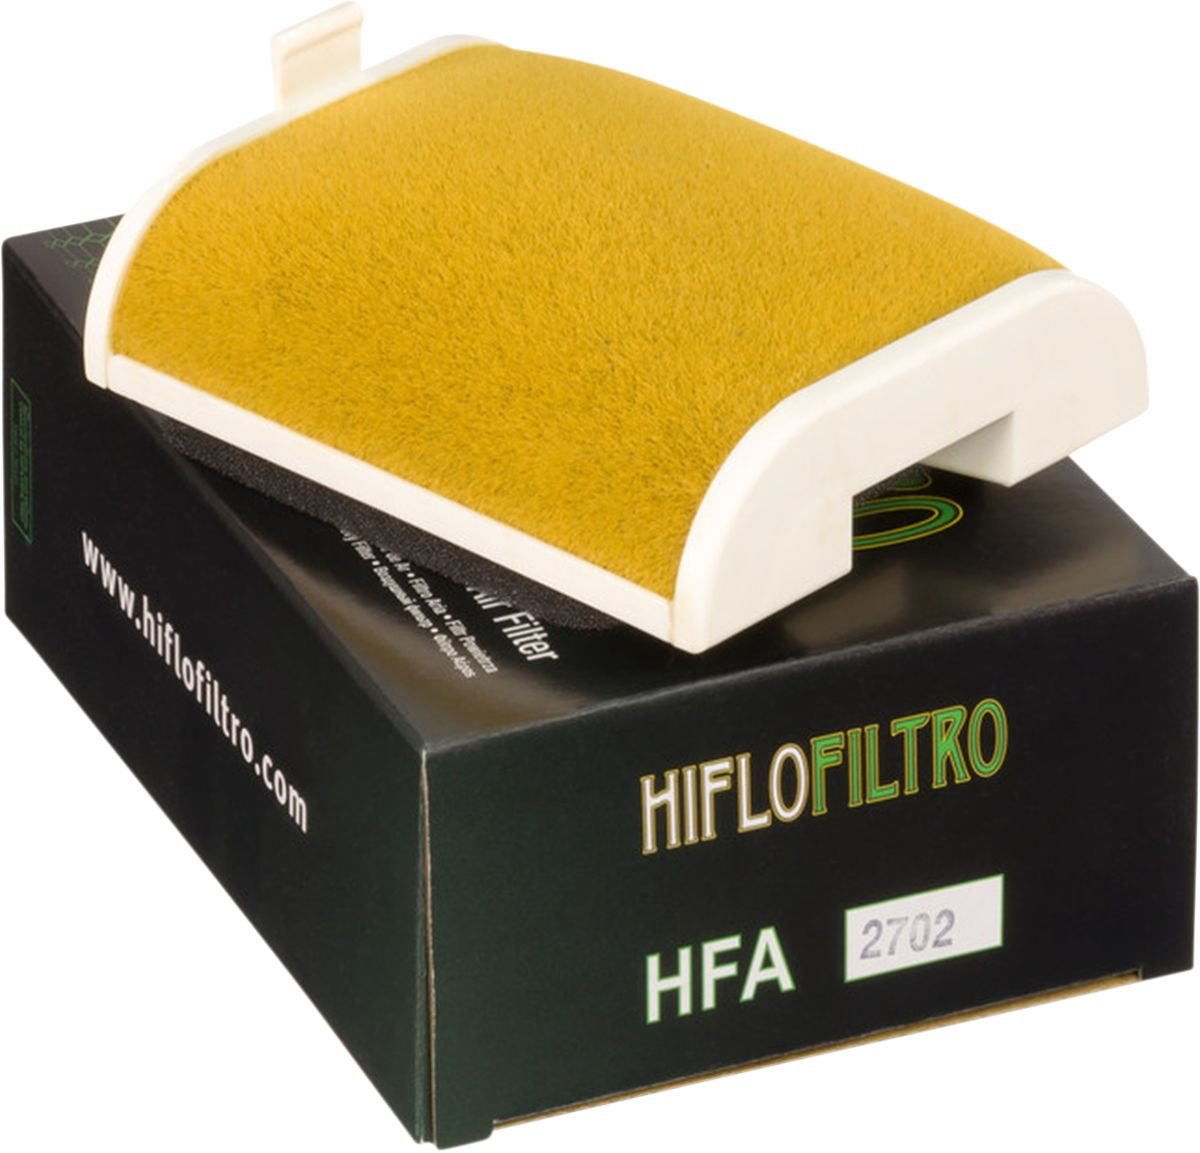 HIFLOFILTRO Air Filter Gpz1100 83-85 von HifloFiltro